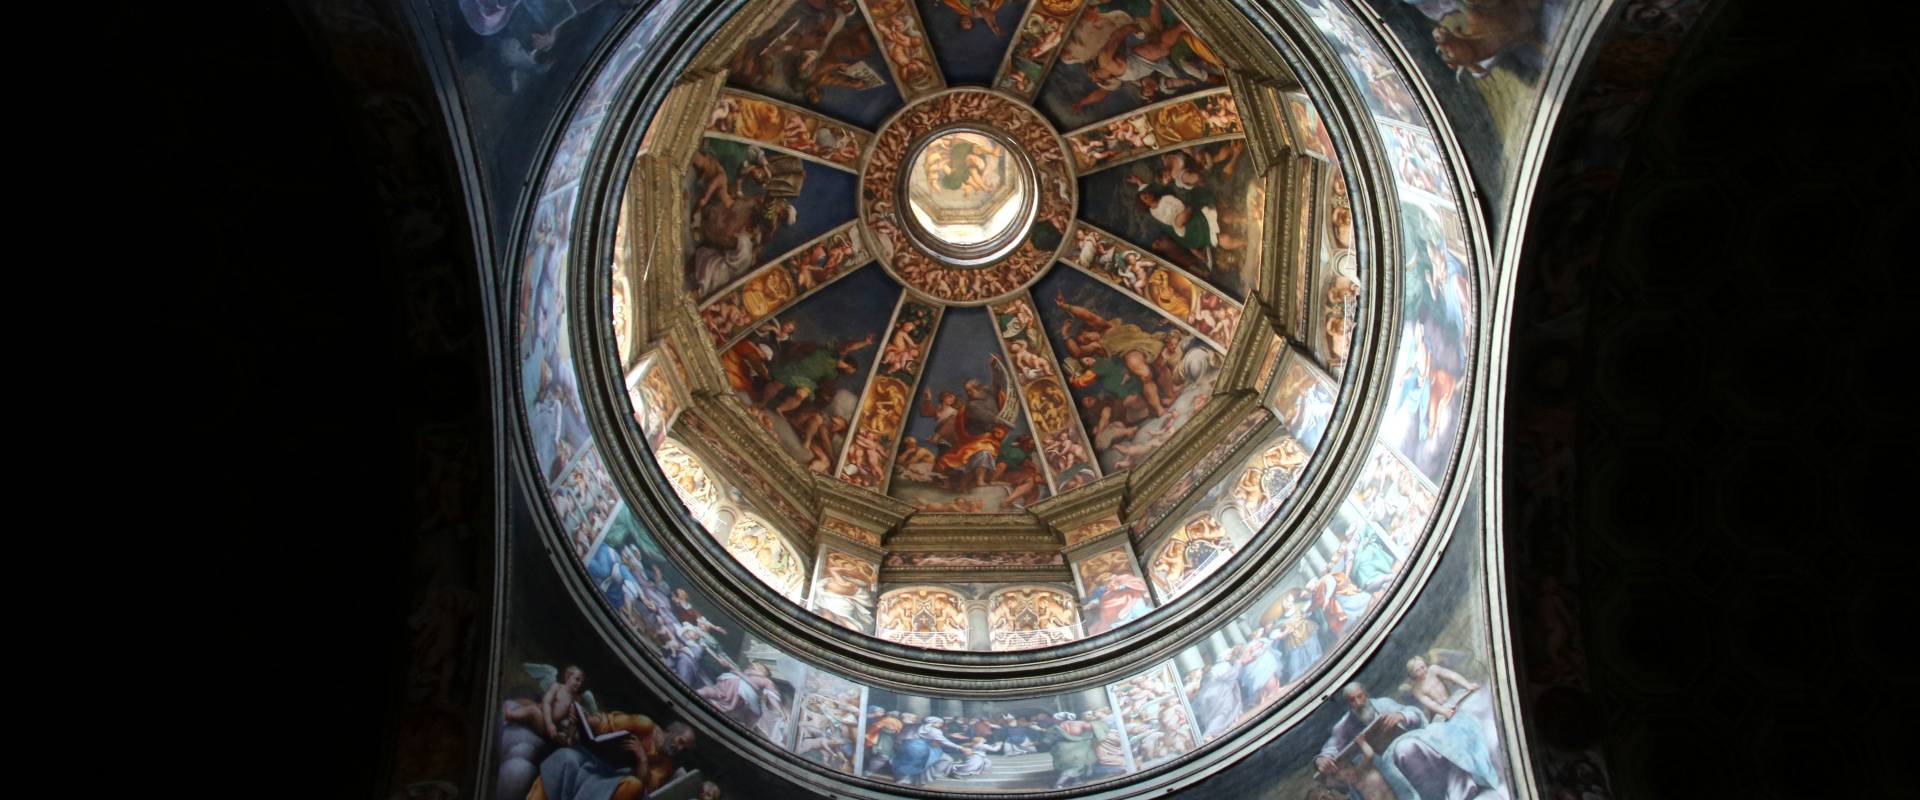 Cupola, affrescato dal Pordenone (1530) 05 photo by Mongolo1984